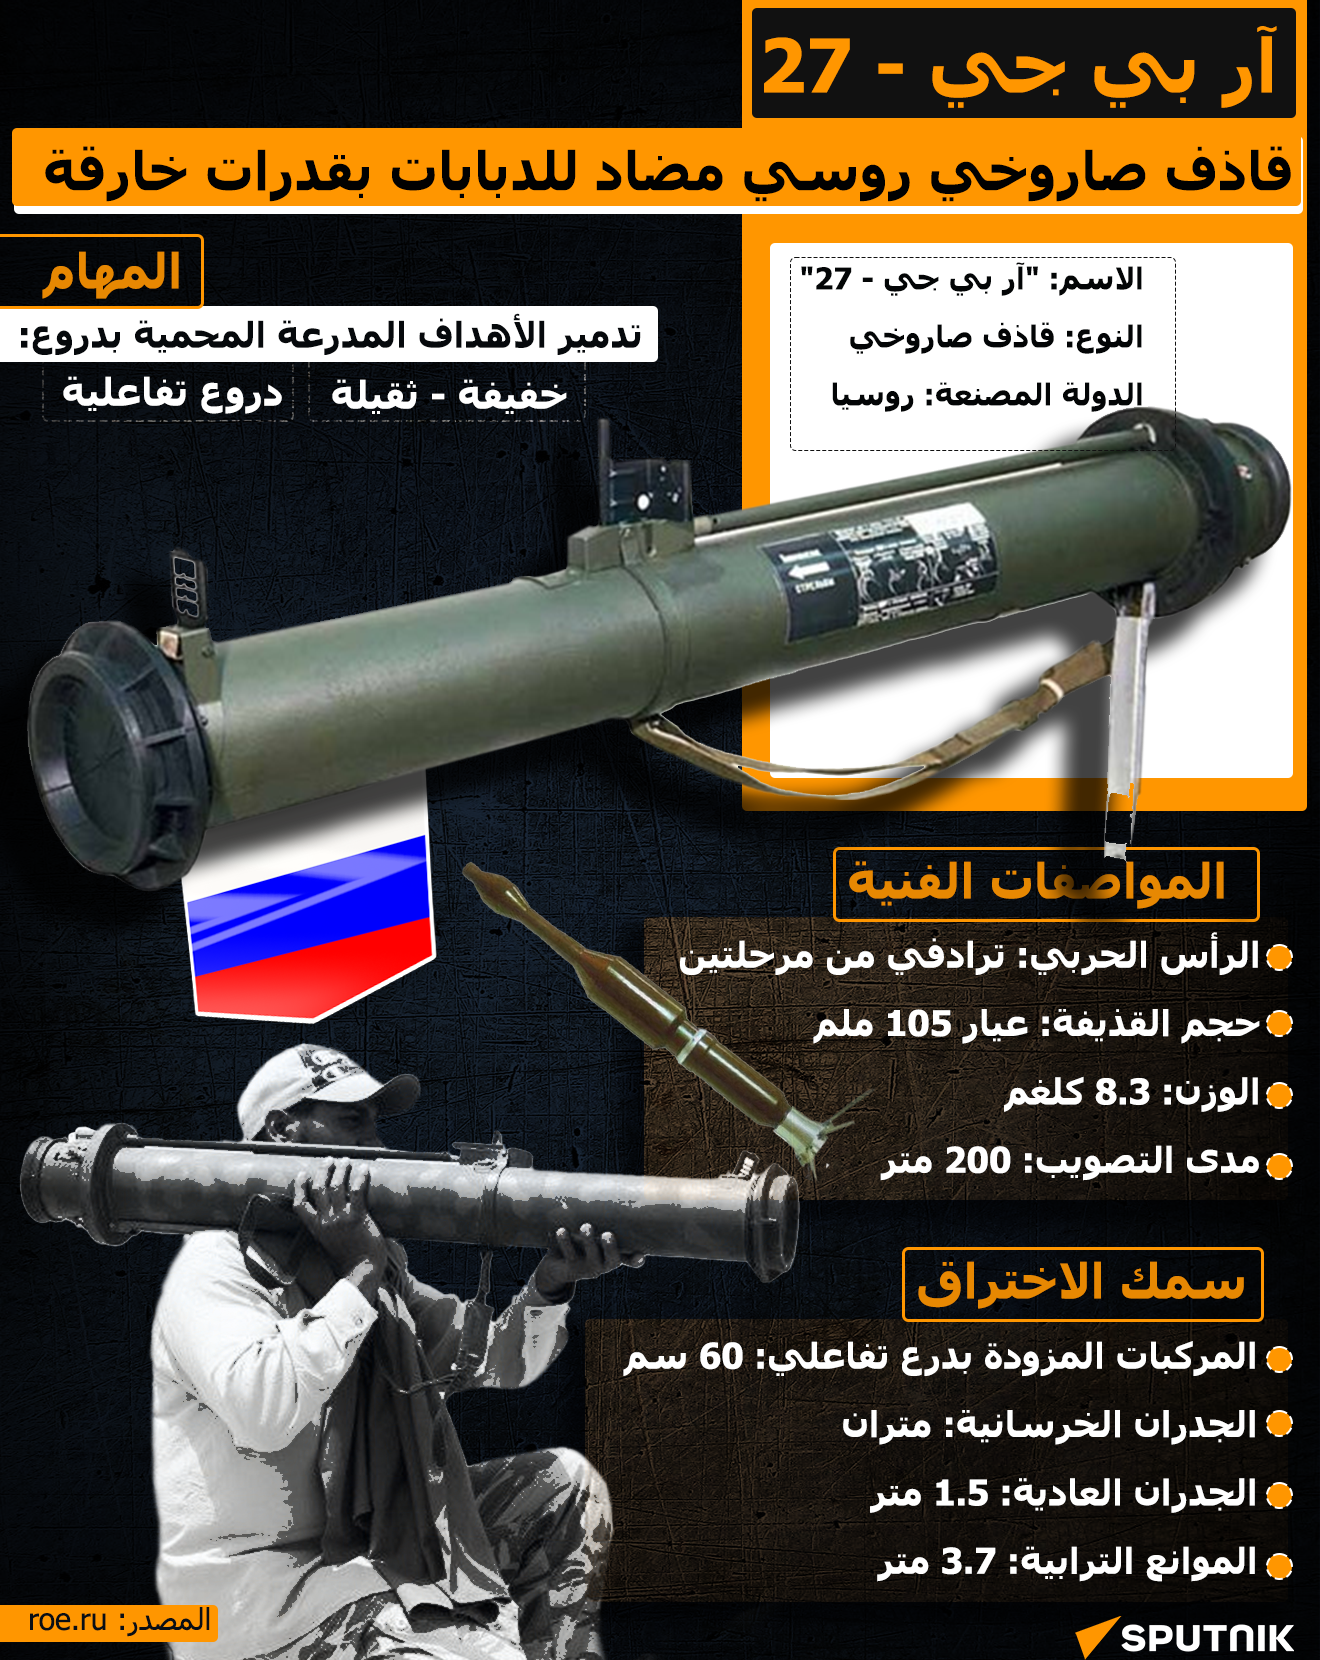 آر بي جي - 27... قاذف صاروخي روسي مضاد للدبابات بقدرات خارقة - سبوتنيك عربي